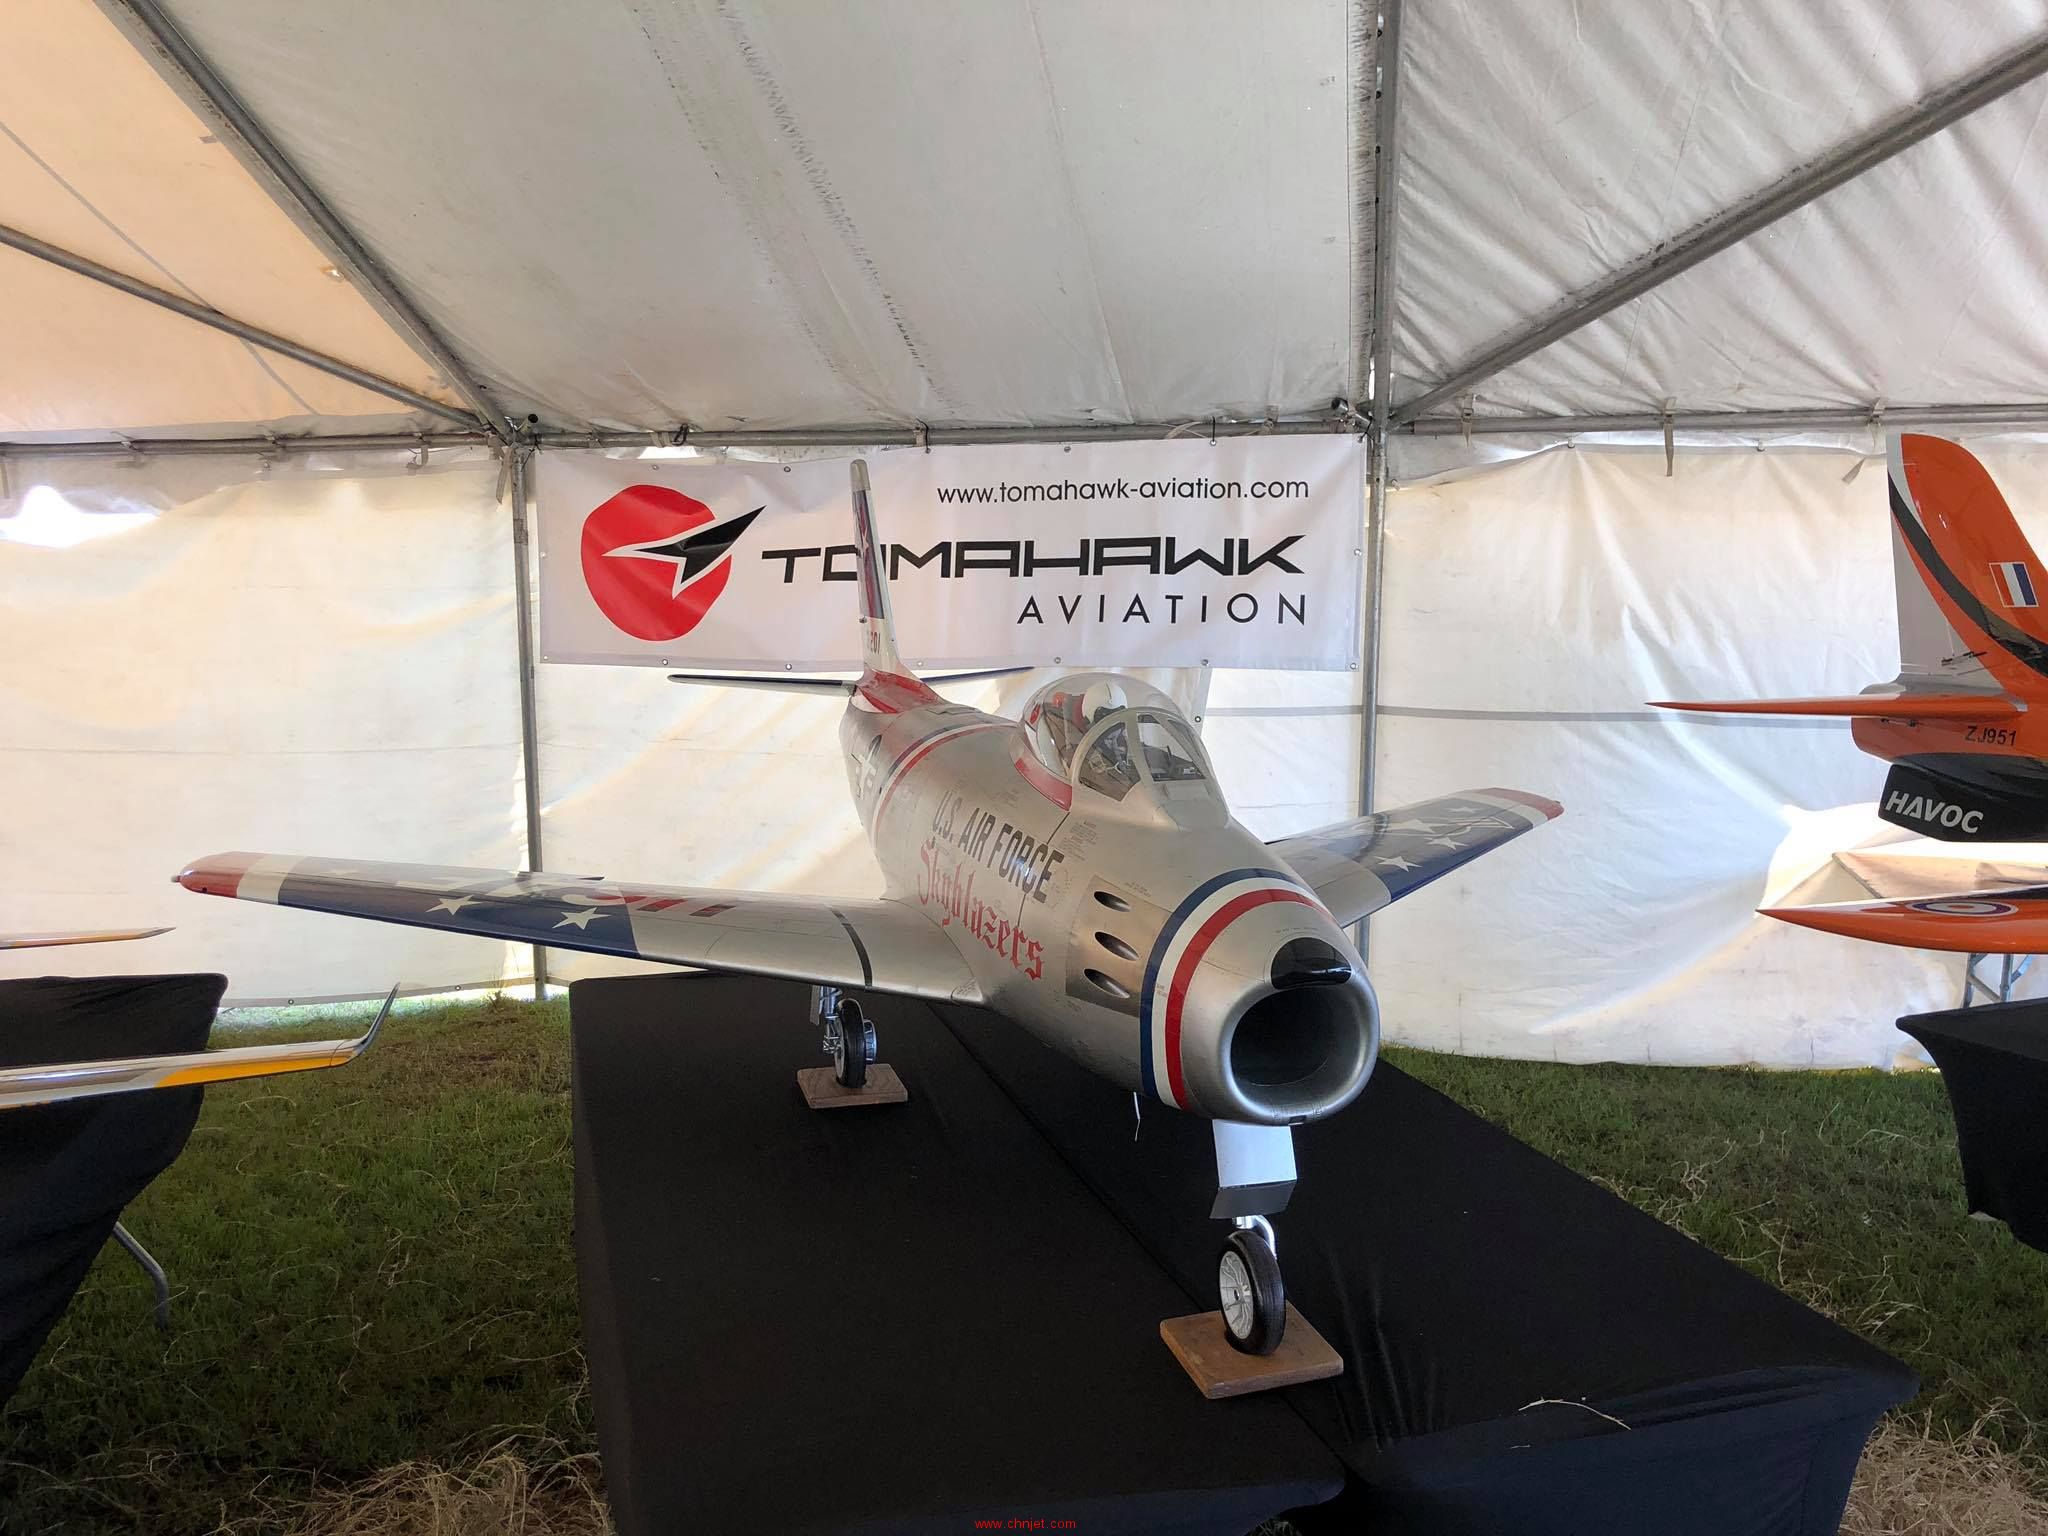 Tomahawk Aviation的展台